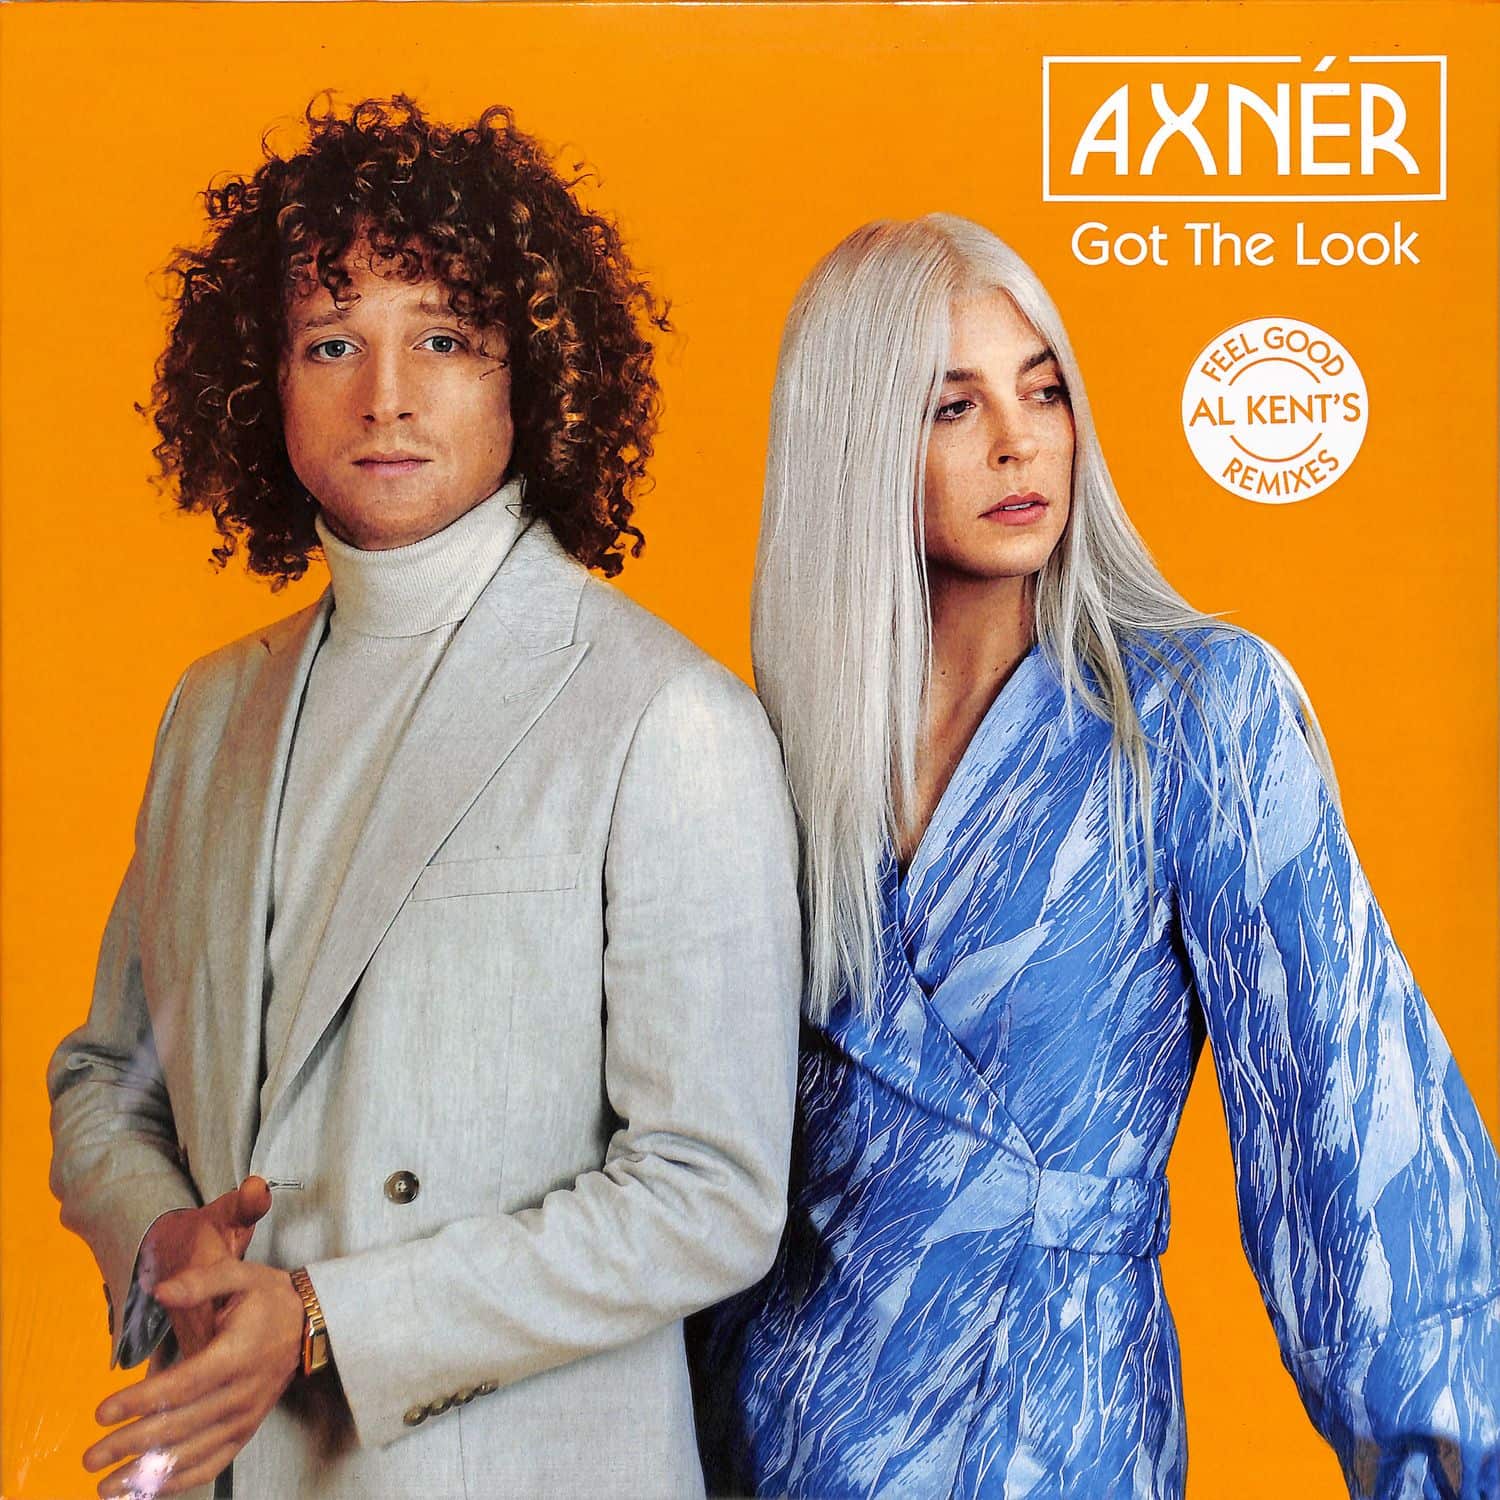 Axner - GOT THE LOOK 